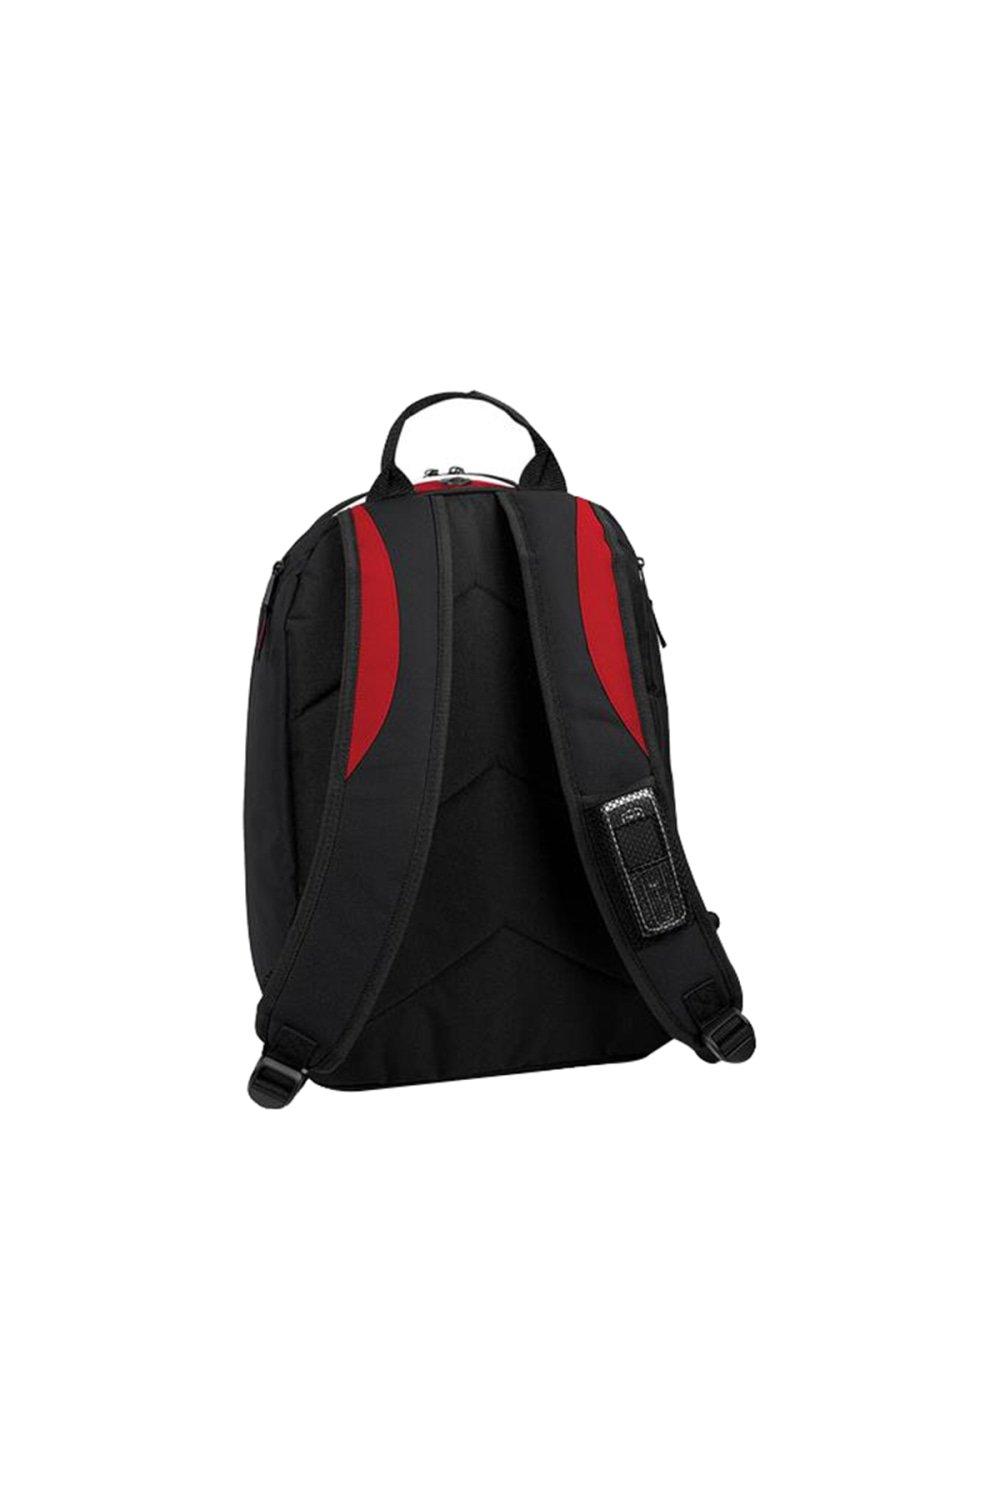 Teamwear Backpack Rucksack (21 Litres) Pack of 2